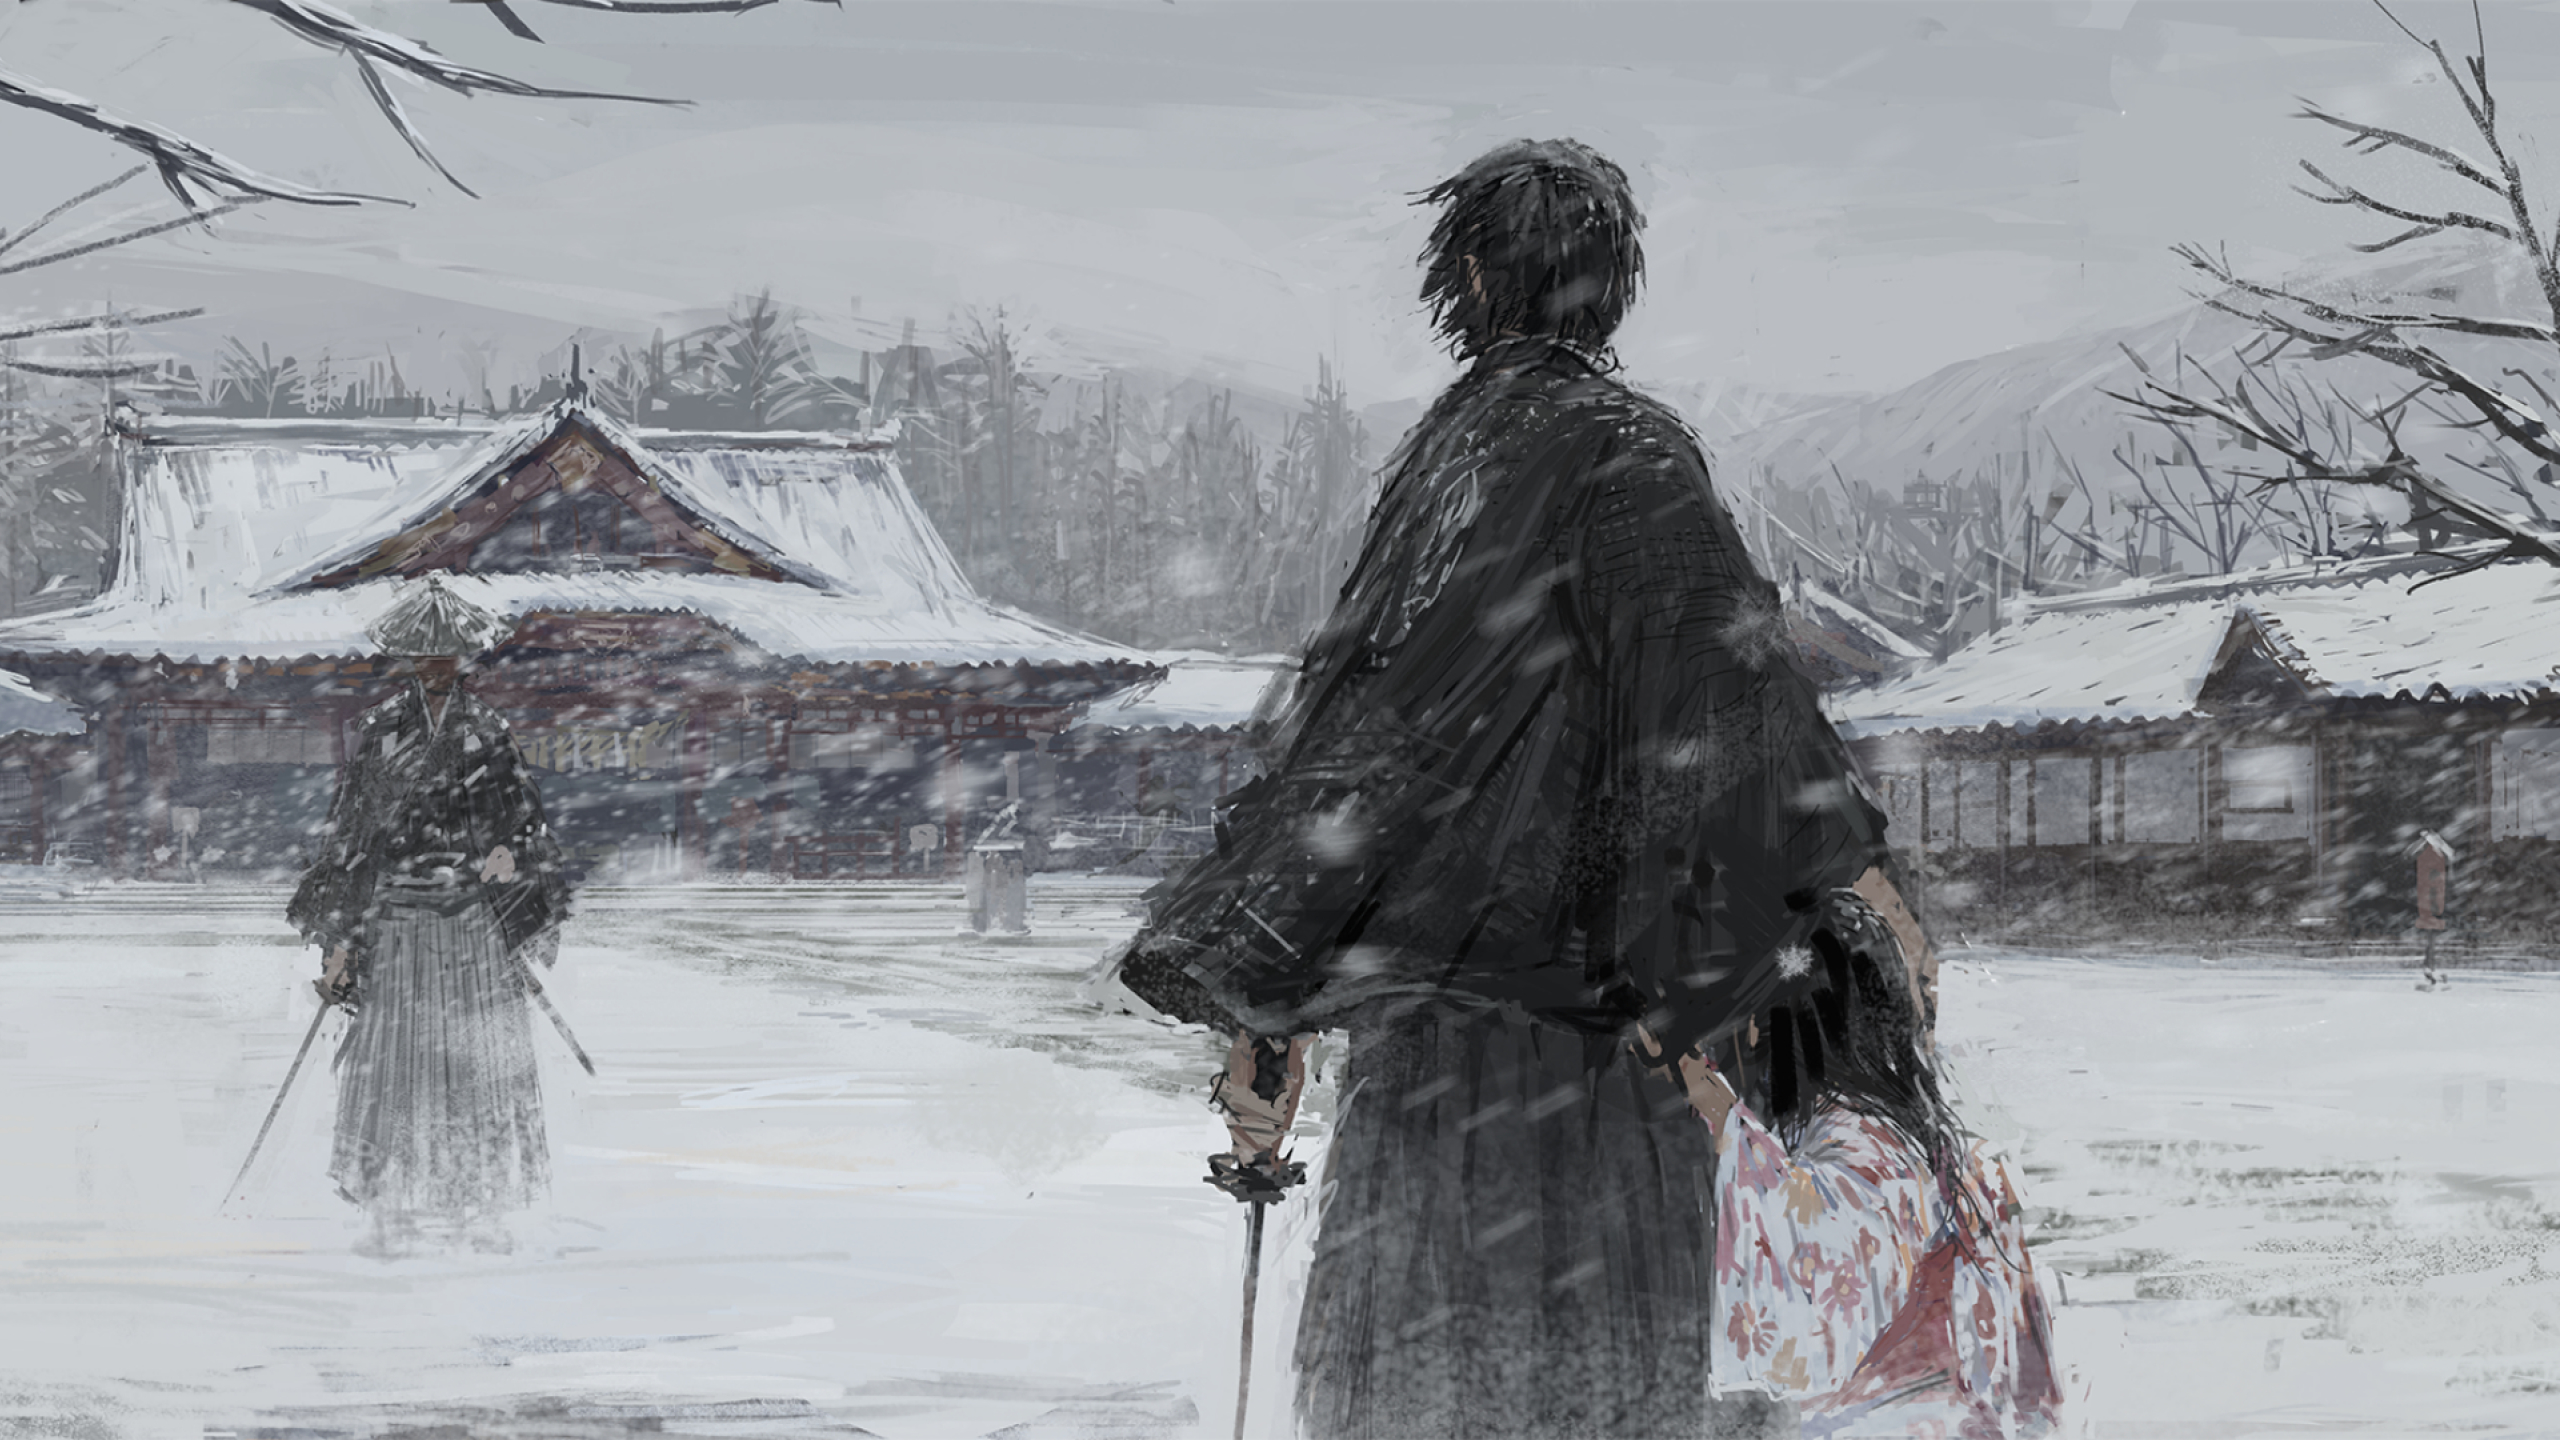 2560x1440 Resolution Samurai Warrior in Winter Illustration 1440P